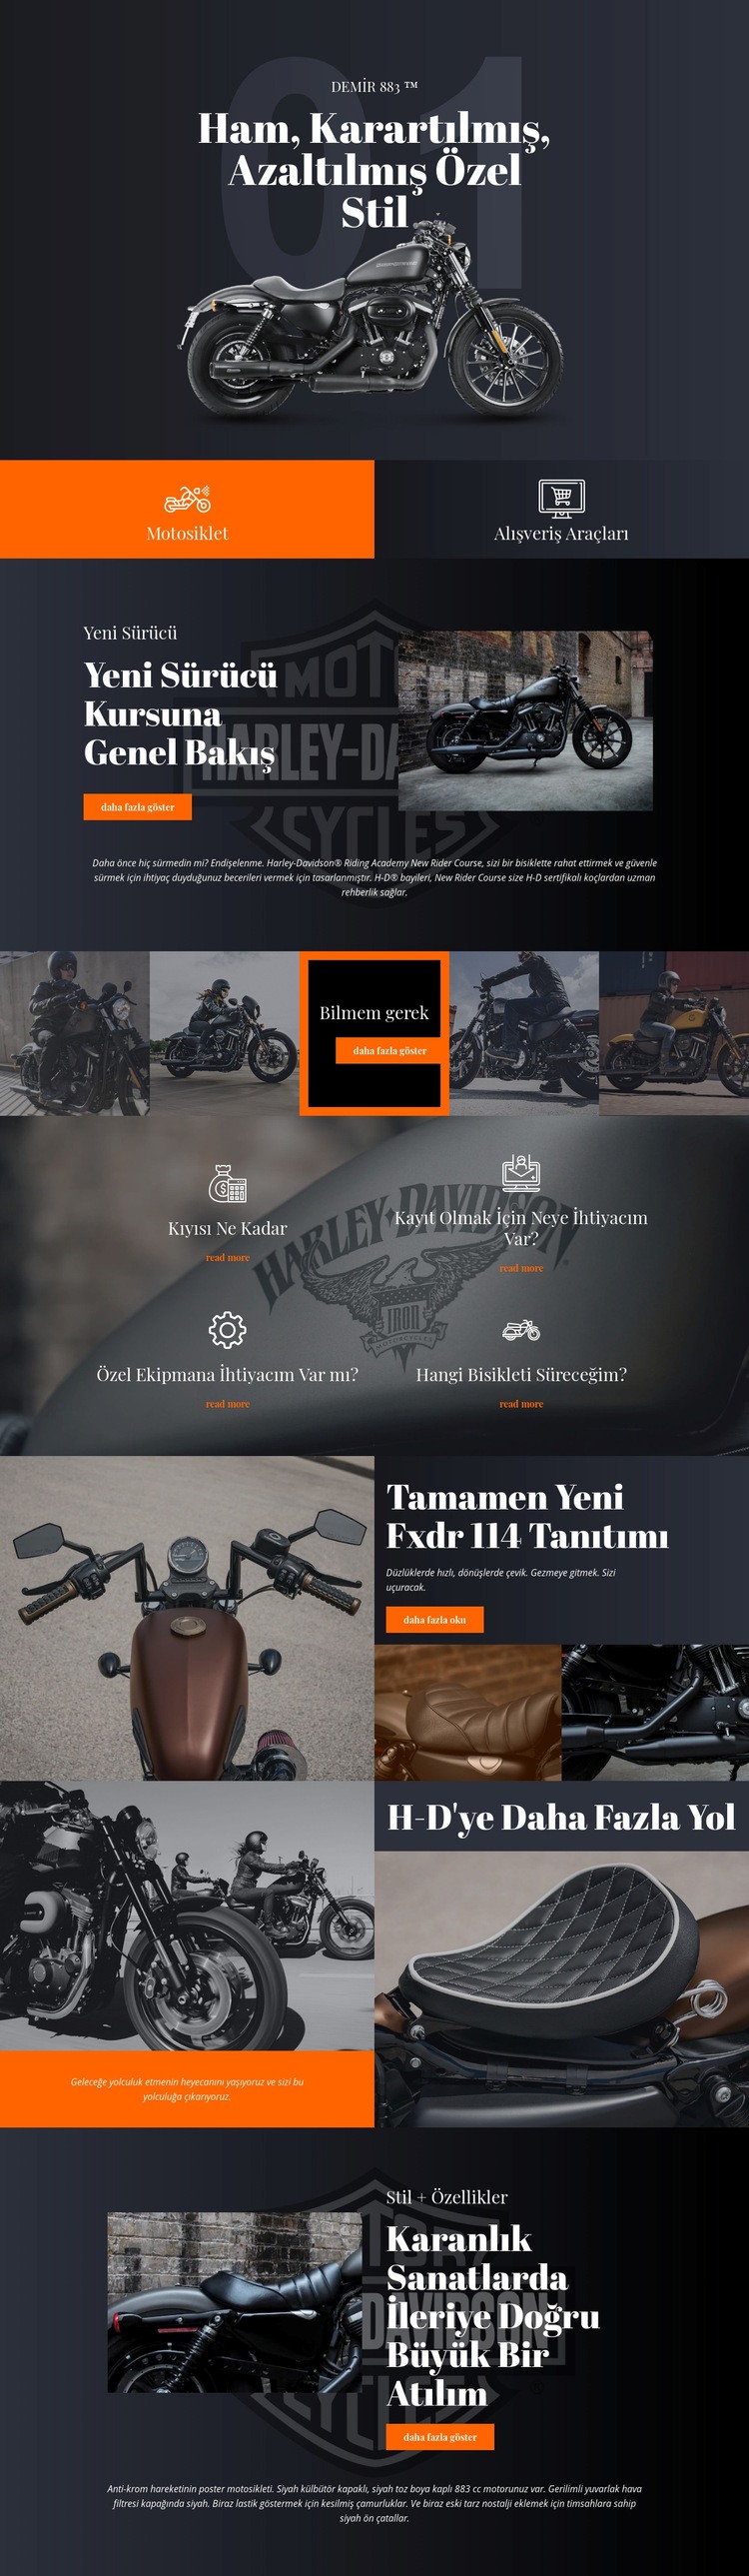 Harley Davidson Şablon